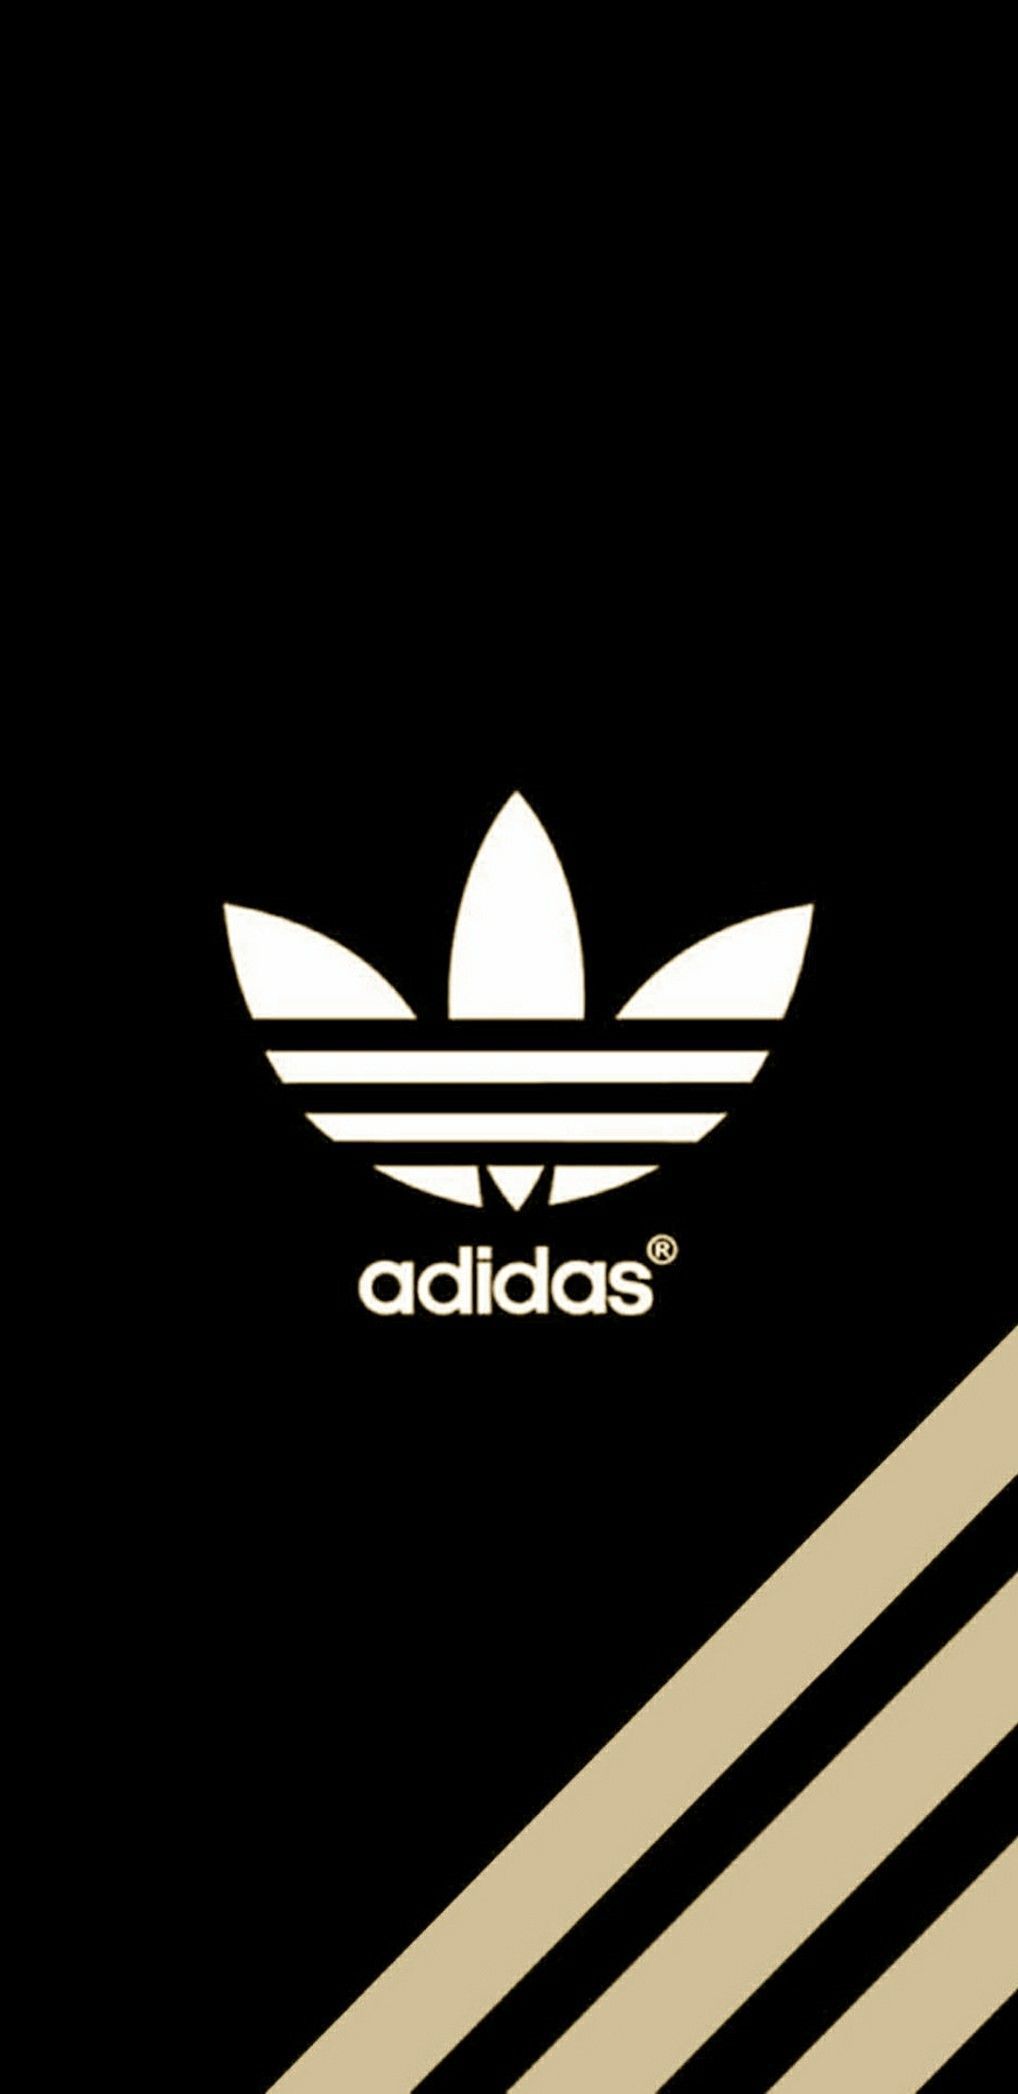 Adidas Wallpaper For Phone. Logo Wallpaper. Hintergrundbilder iphone, Hintergrundbilder, Adidas bilder